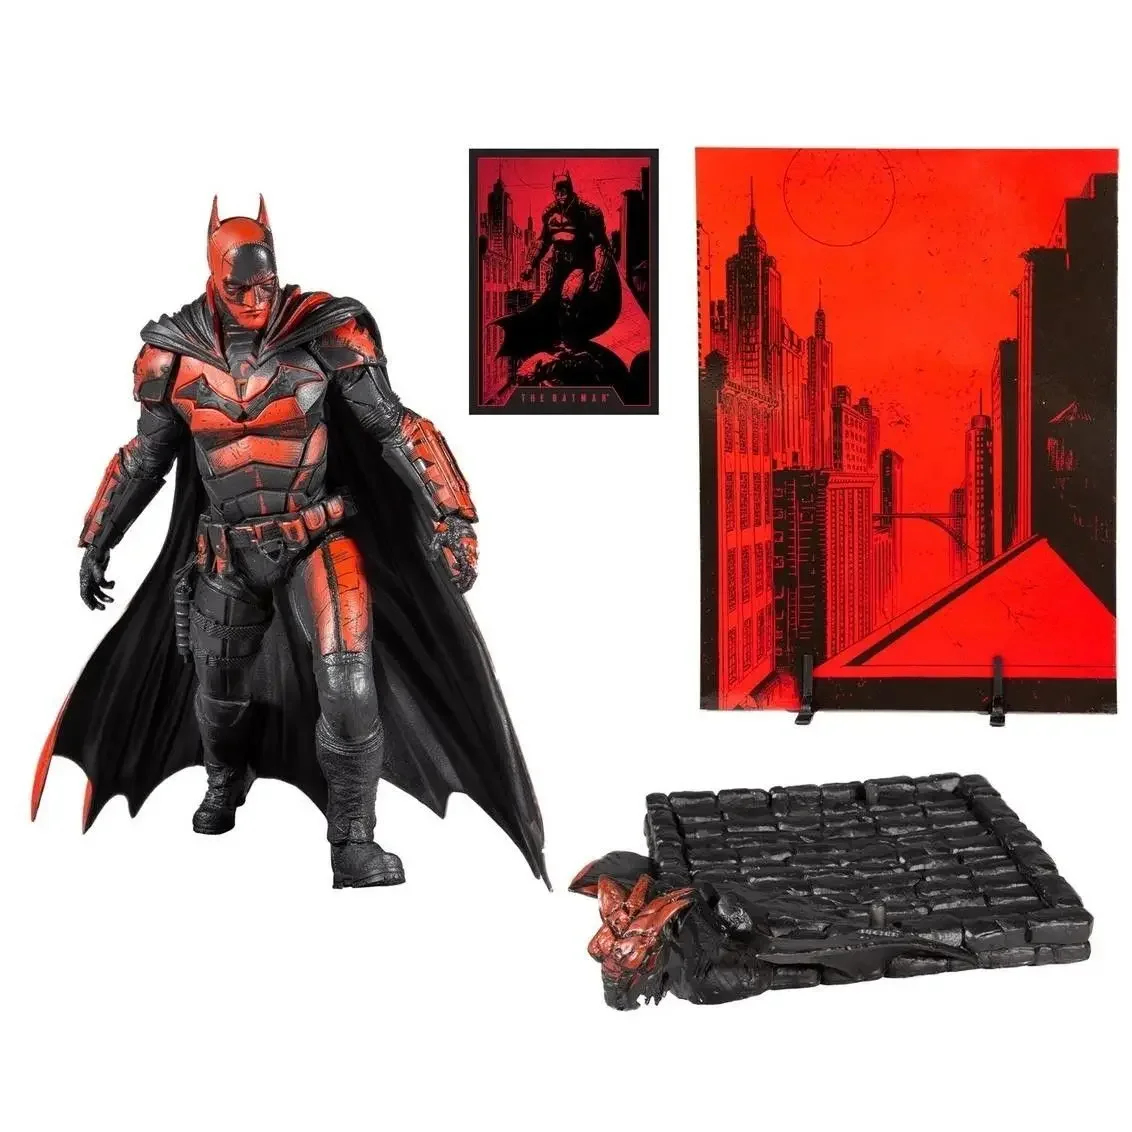 

Original Mcfarlane 40cm Dc Comics Dark Knight Batman Action Figures Toy Large Standing Figurines Model Ornaments Kid‘s Day Gifts